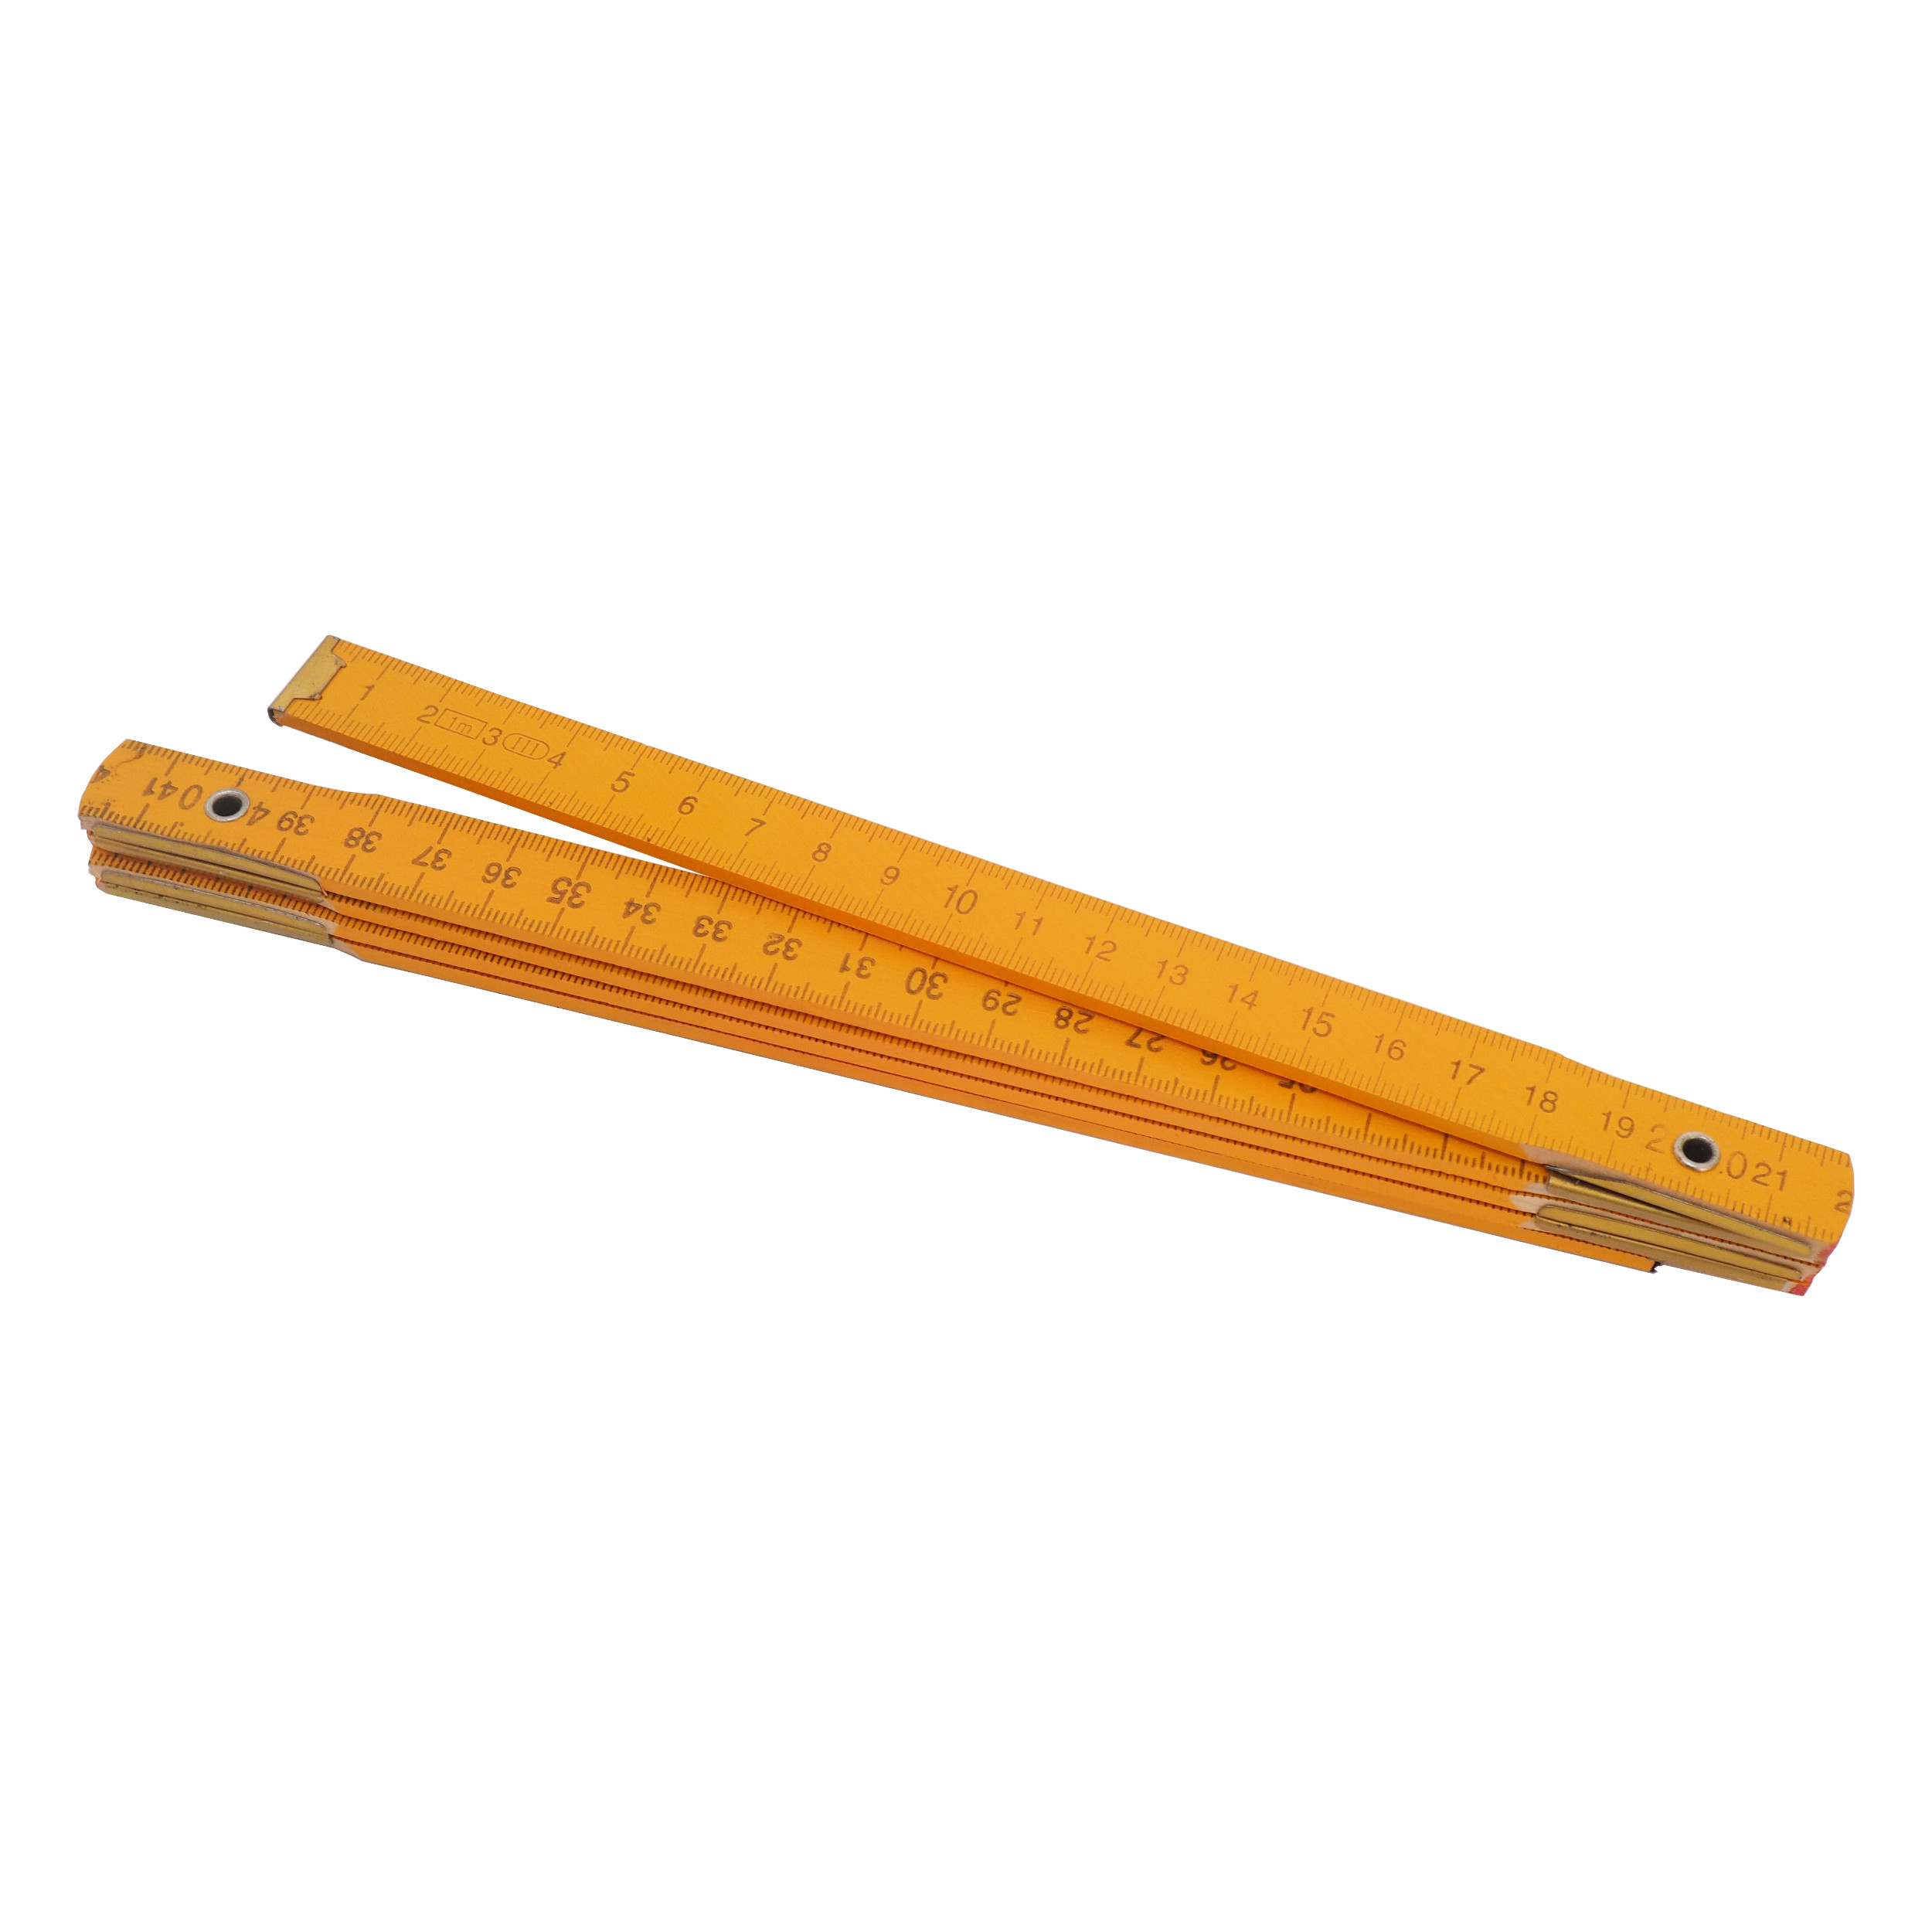 TOPTRADE metr skládací, dřevěný, žlutý, 2 m, standard 0.09 Kg TOP Sklad4 500101 31